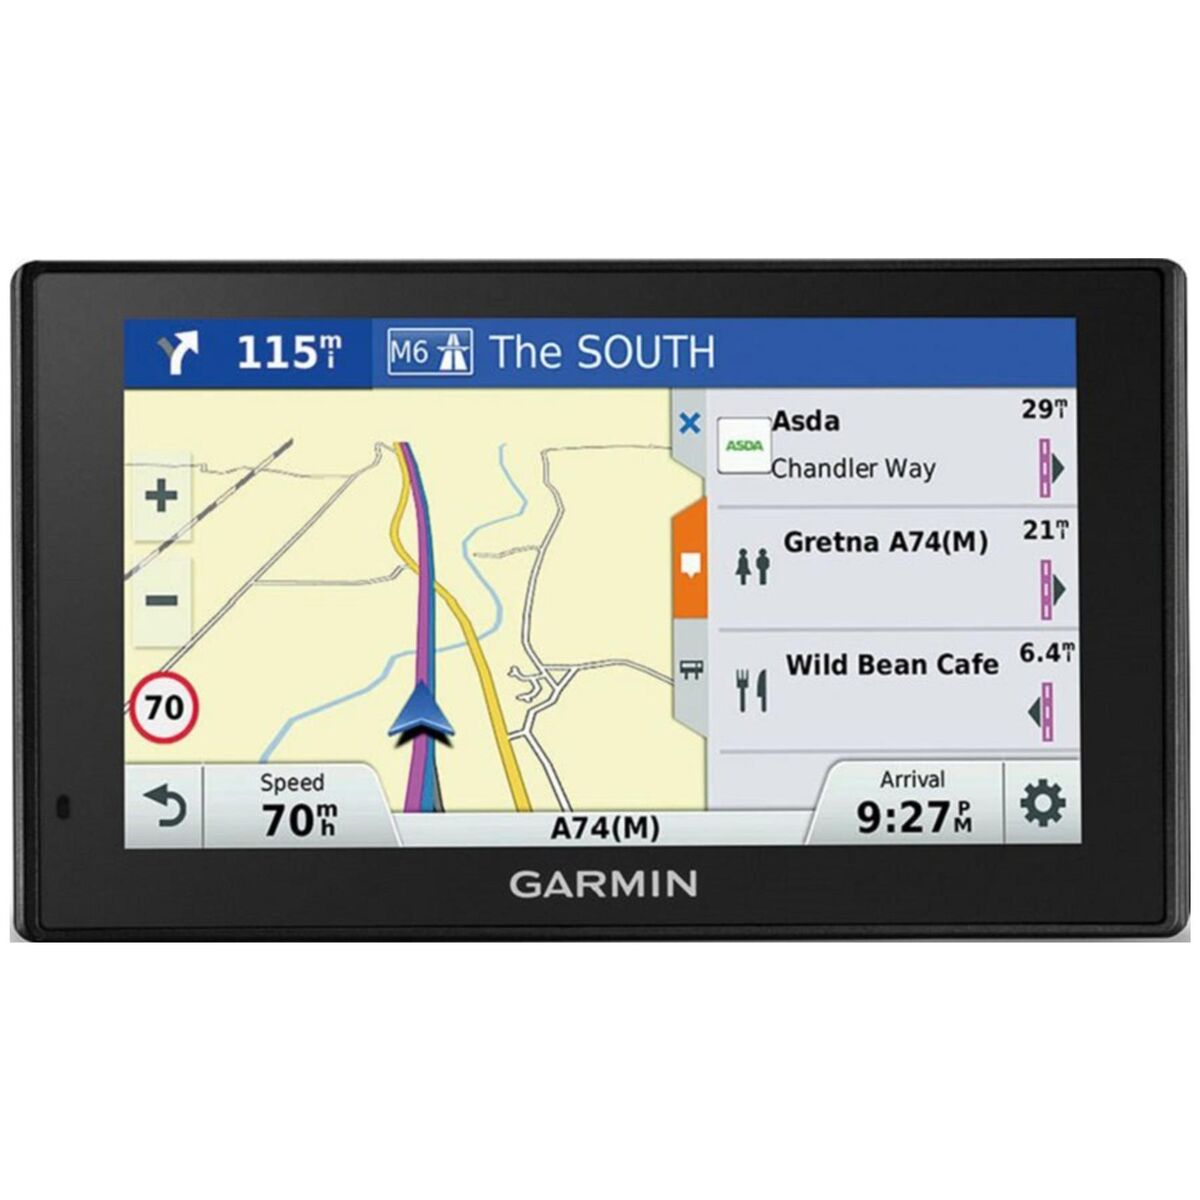 Garmin DriveSmart 51 GPS Sat Nav│Preloaded EU Full Maps + Live Traffic 753759210922 | eBay